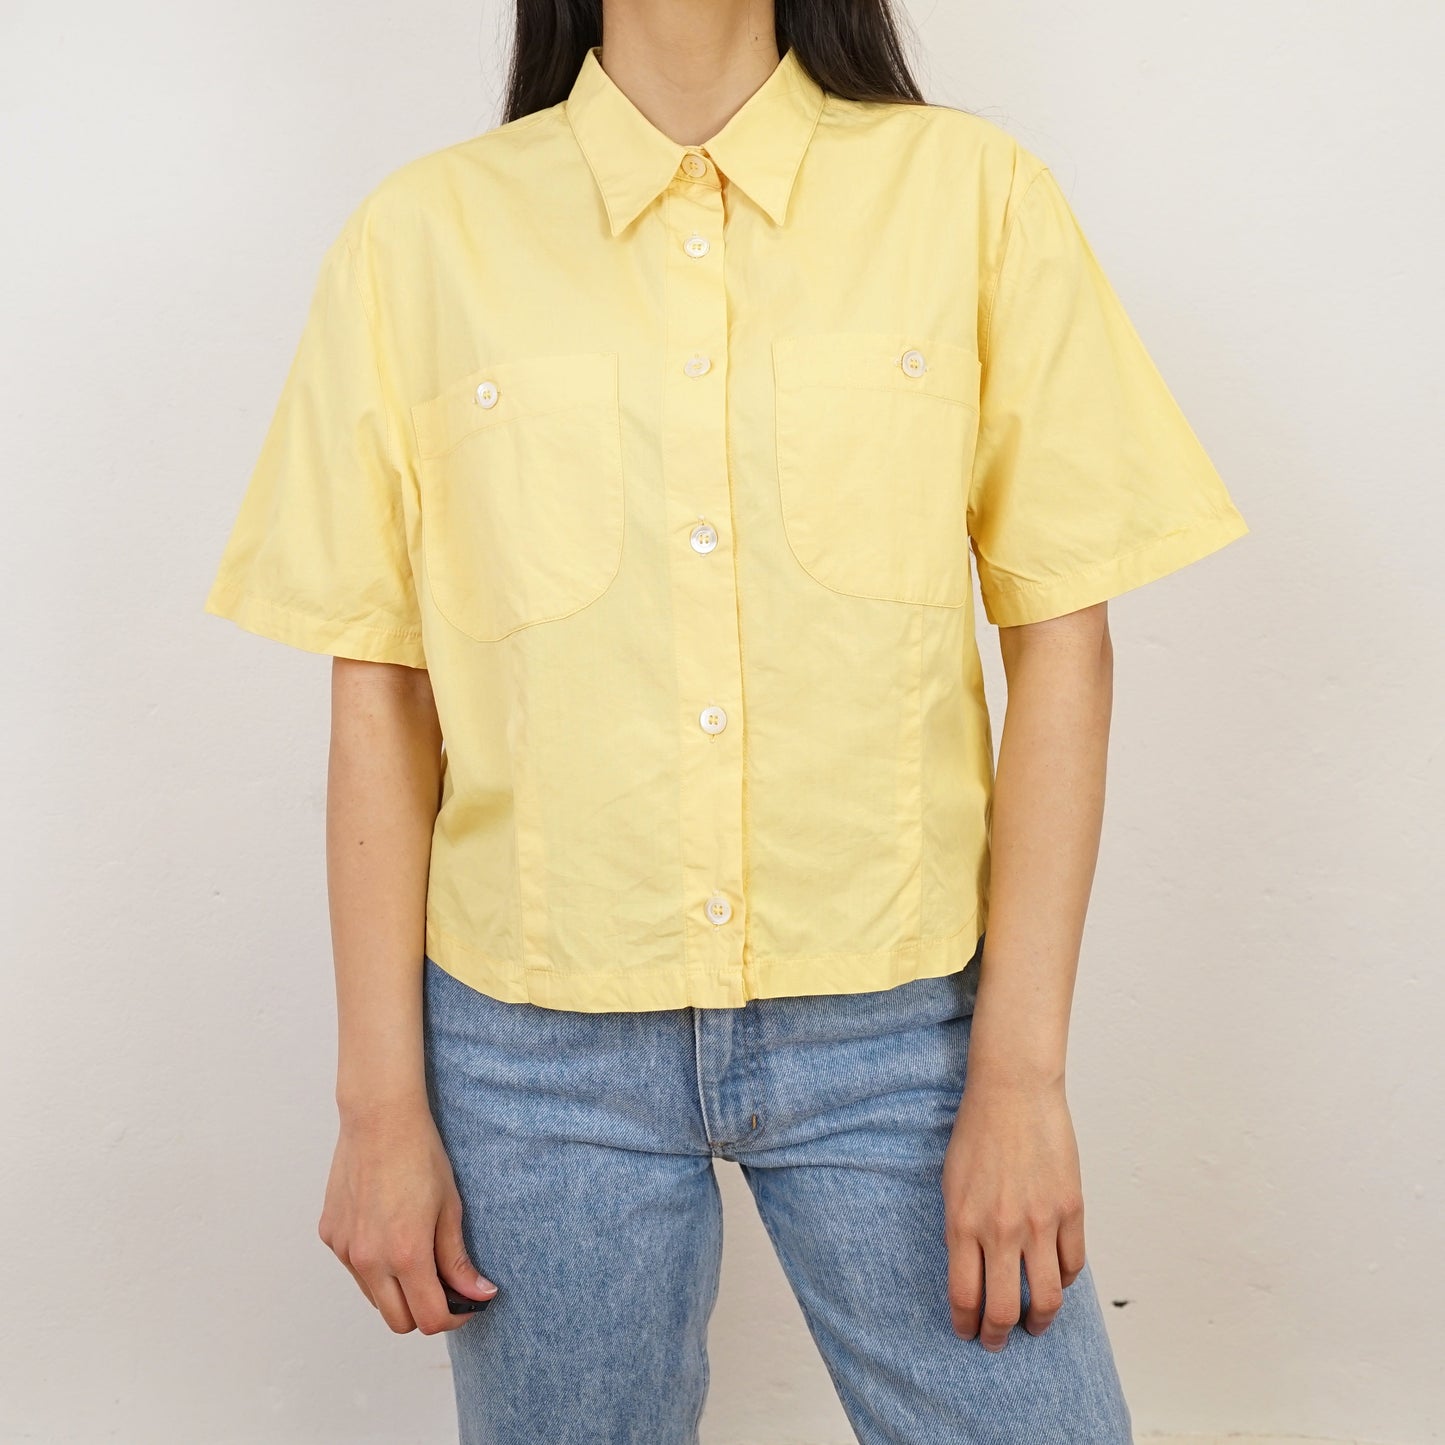 Vintage yellow cotton Blouse Size S-M